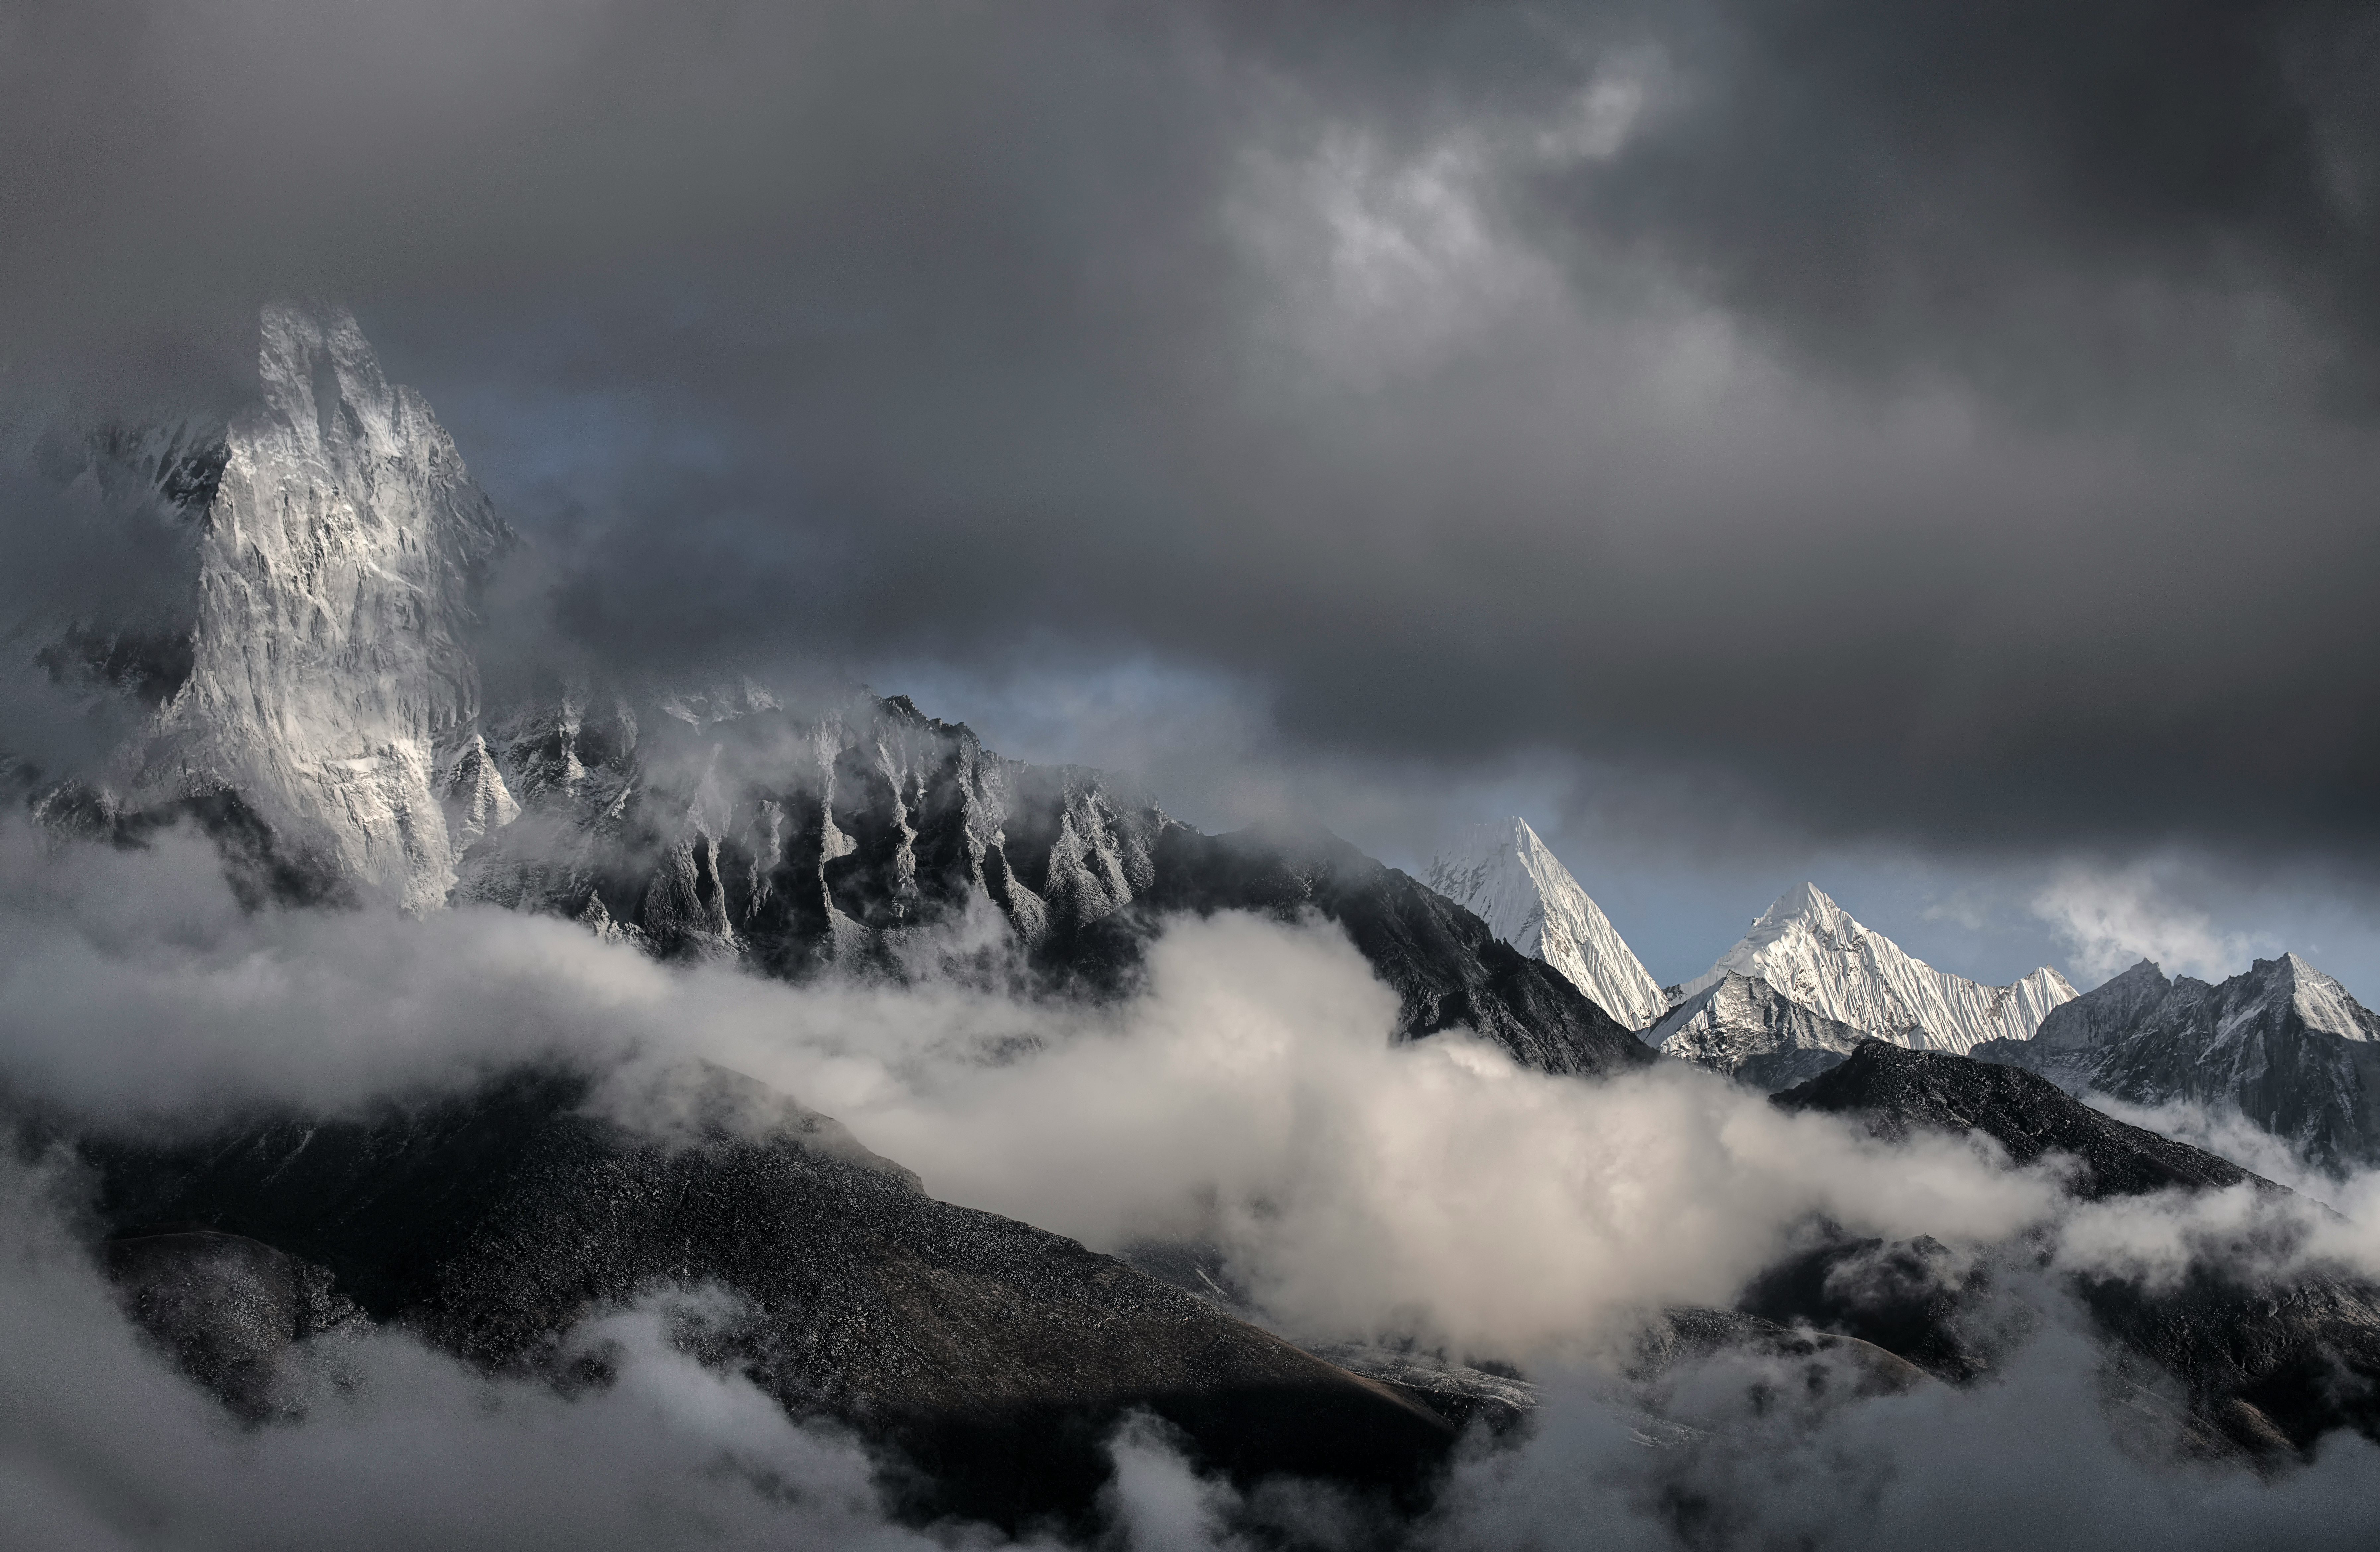 snowy mountain peaks under dark clouds